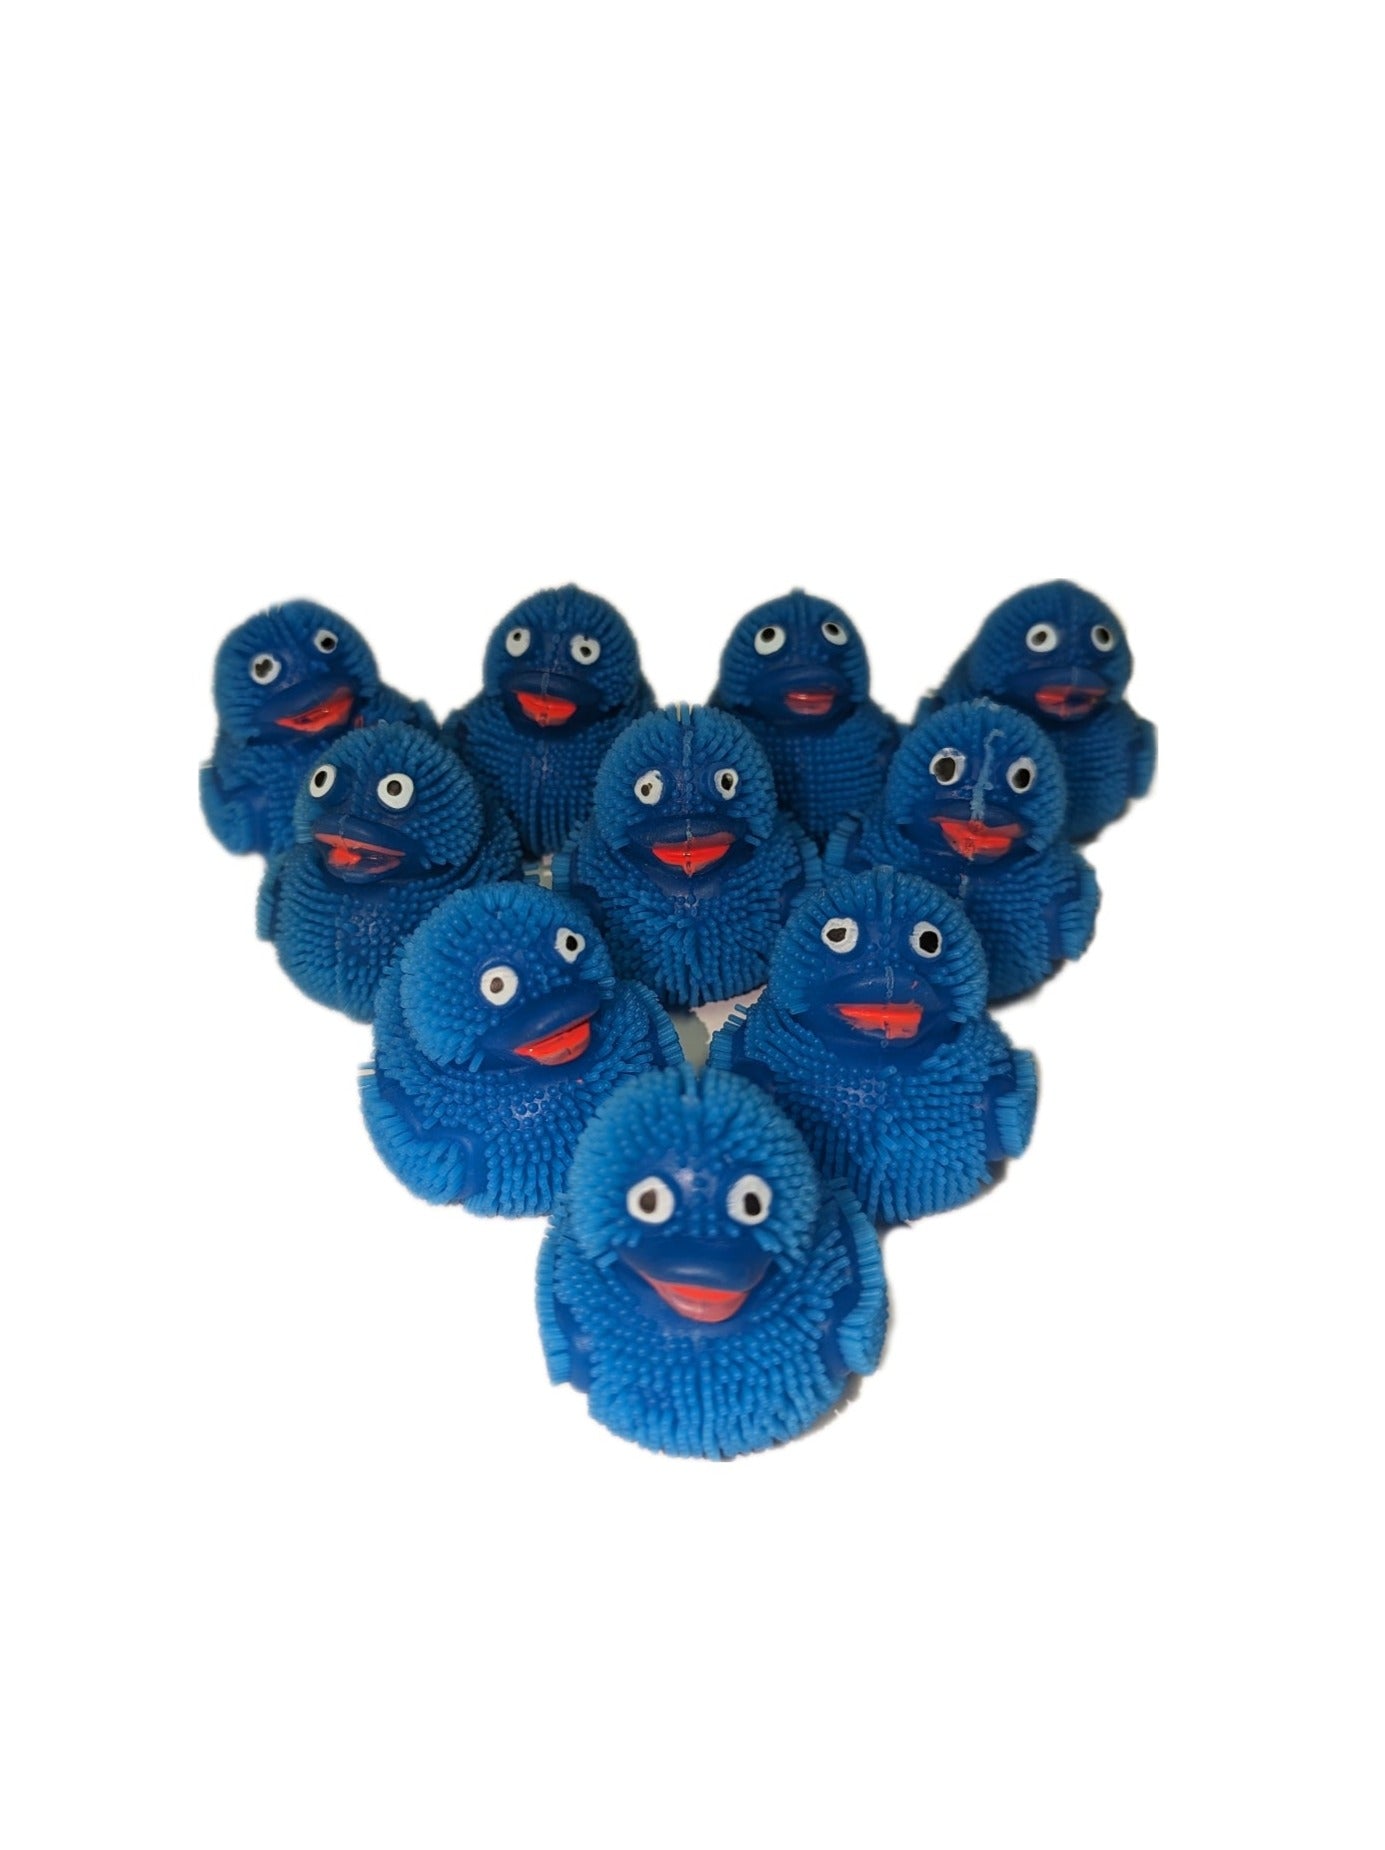 10 Blue Squishy Ducks - 2" Rubber Ducks